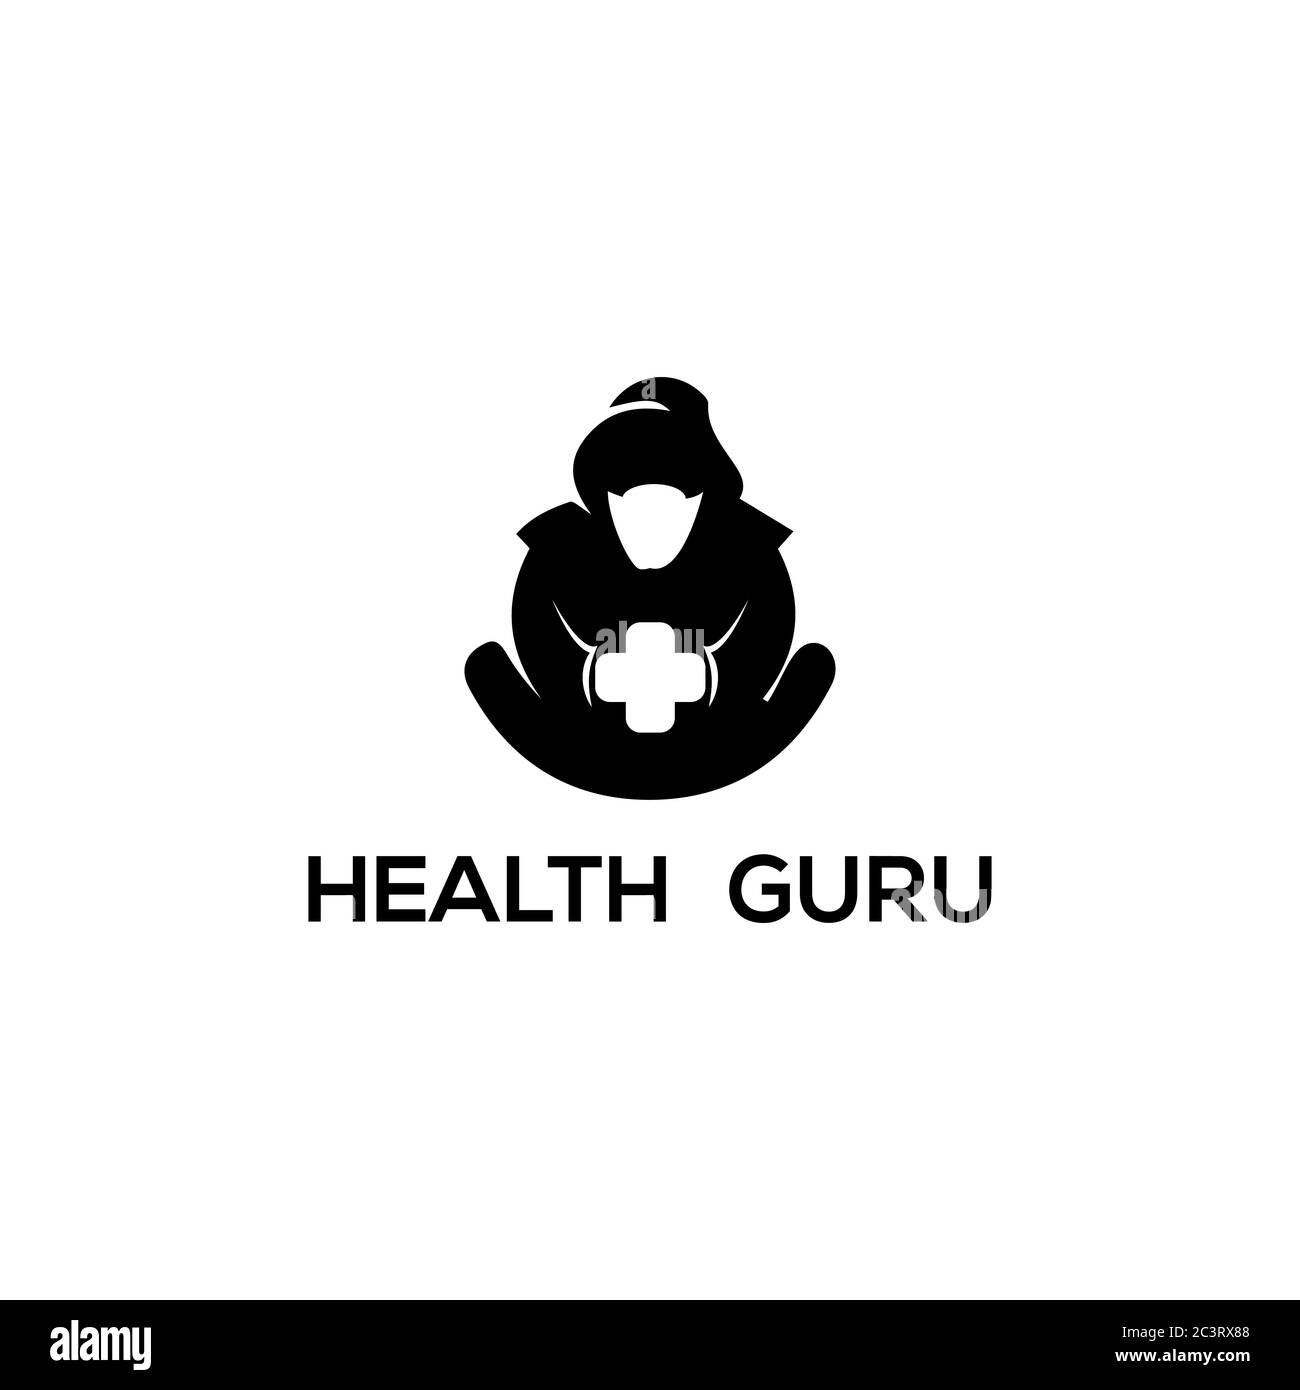 health guru logo vector illustration can use for your trademark, branding identity or commercial brand Stock Vector